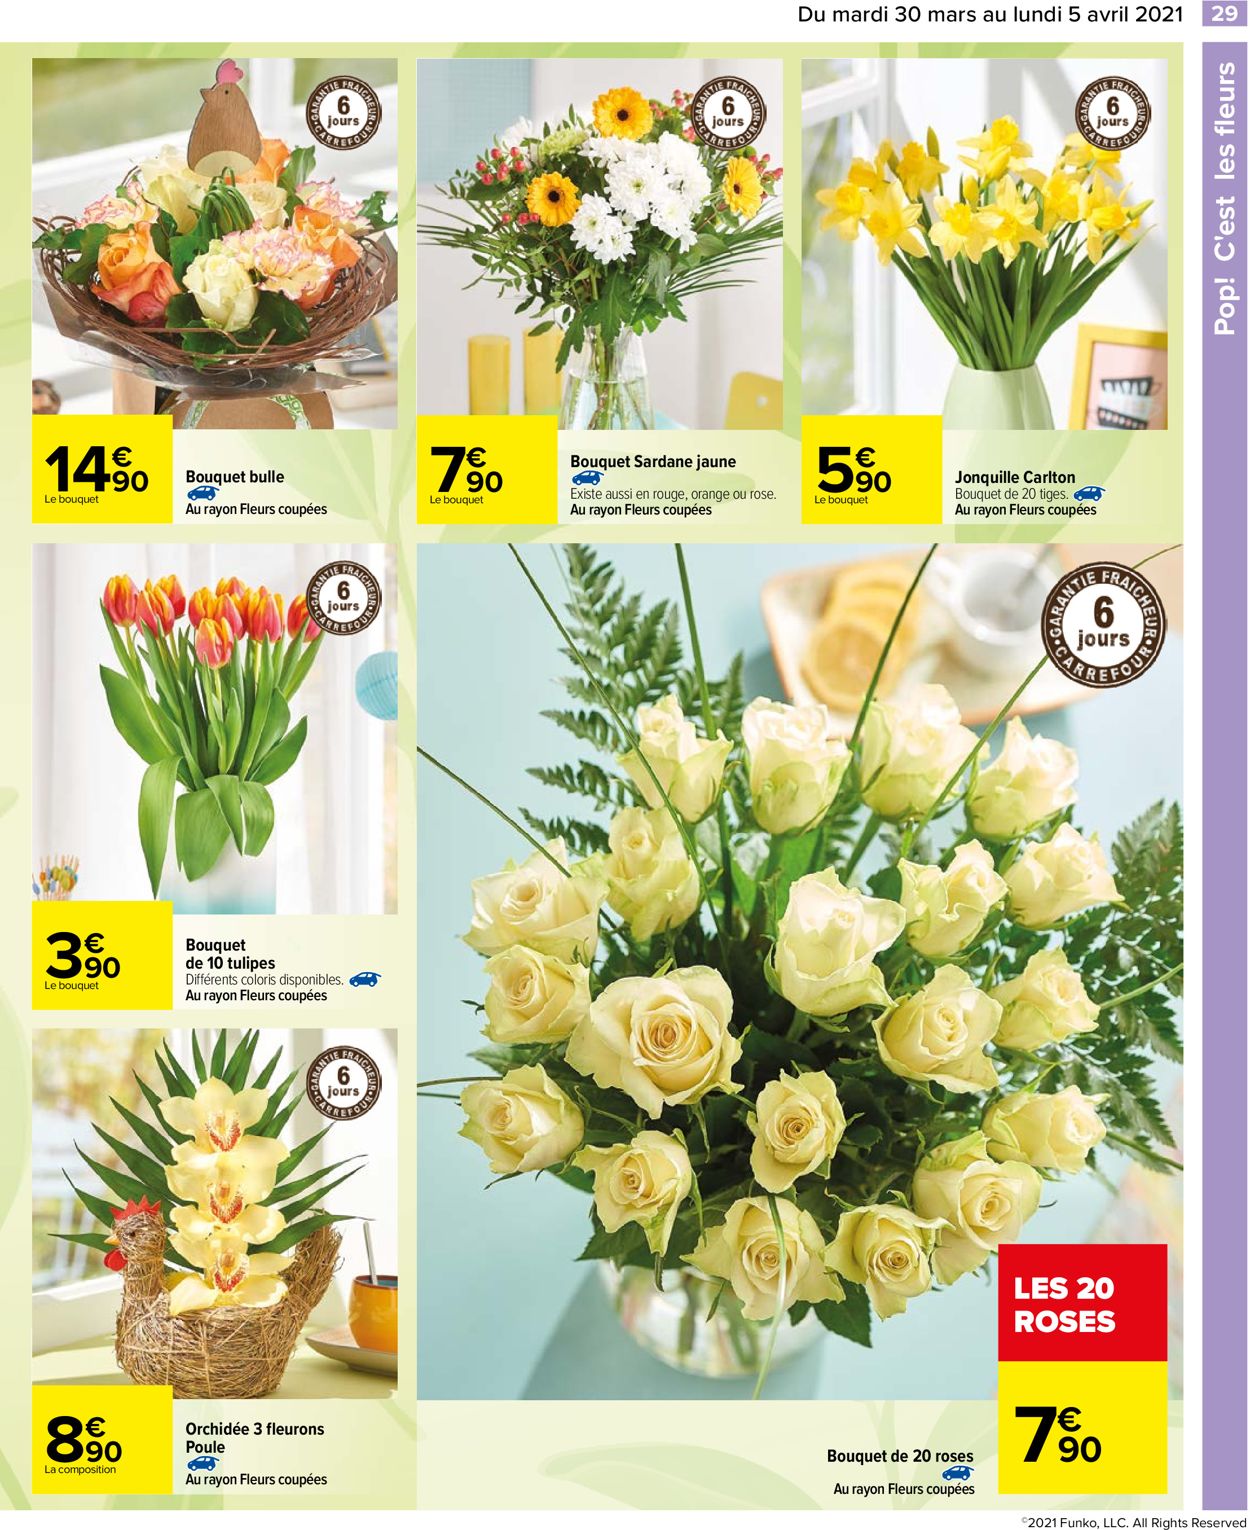 Carrefour Catalogue actuel 30.03 - 05.04.2021 [29]